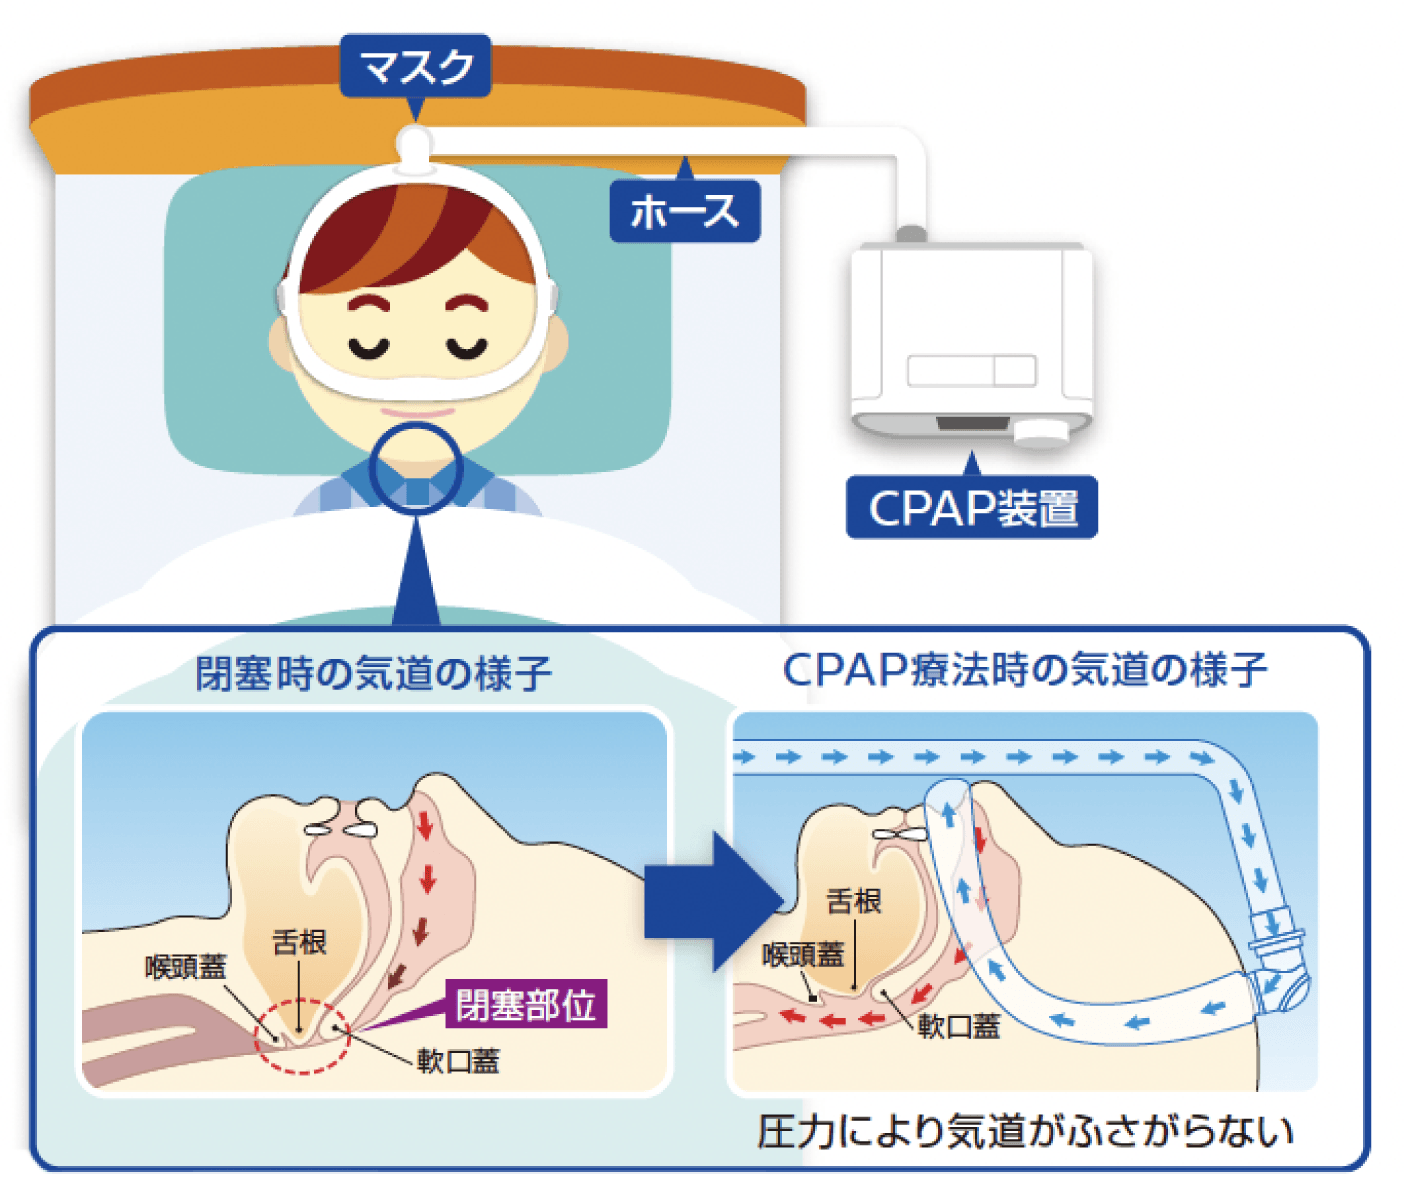 CPAP(持続陽圧呼吸療法) 装置による治療